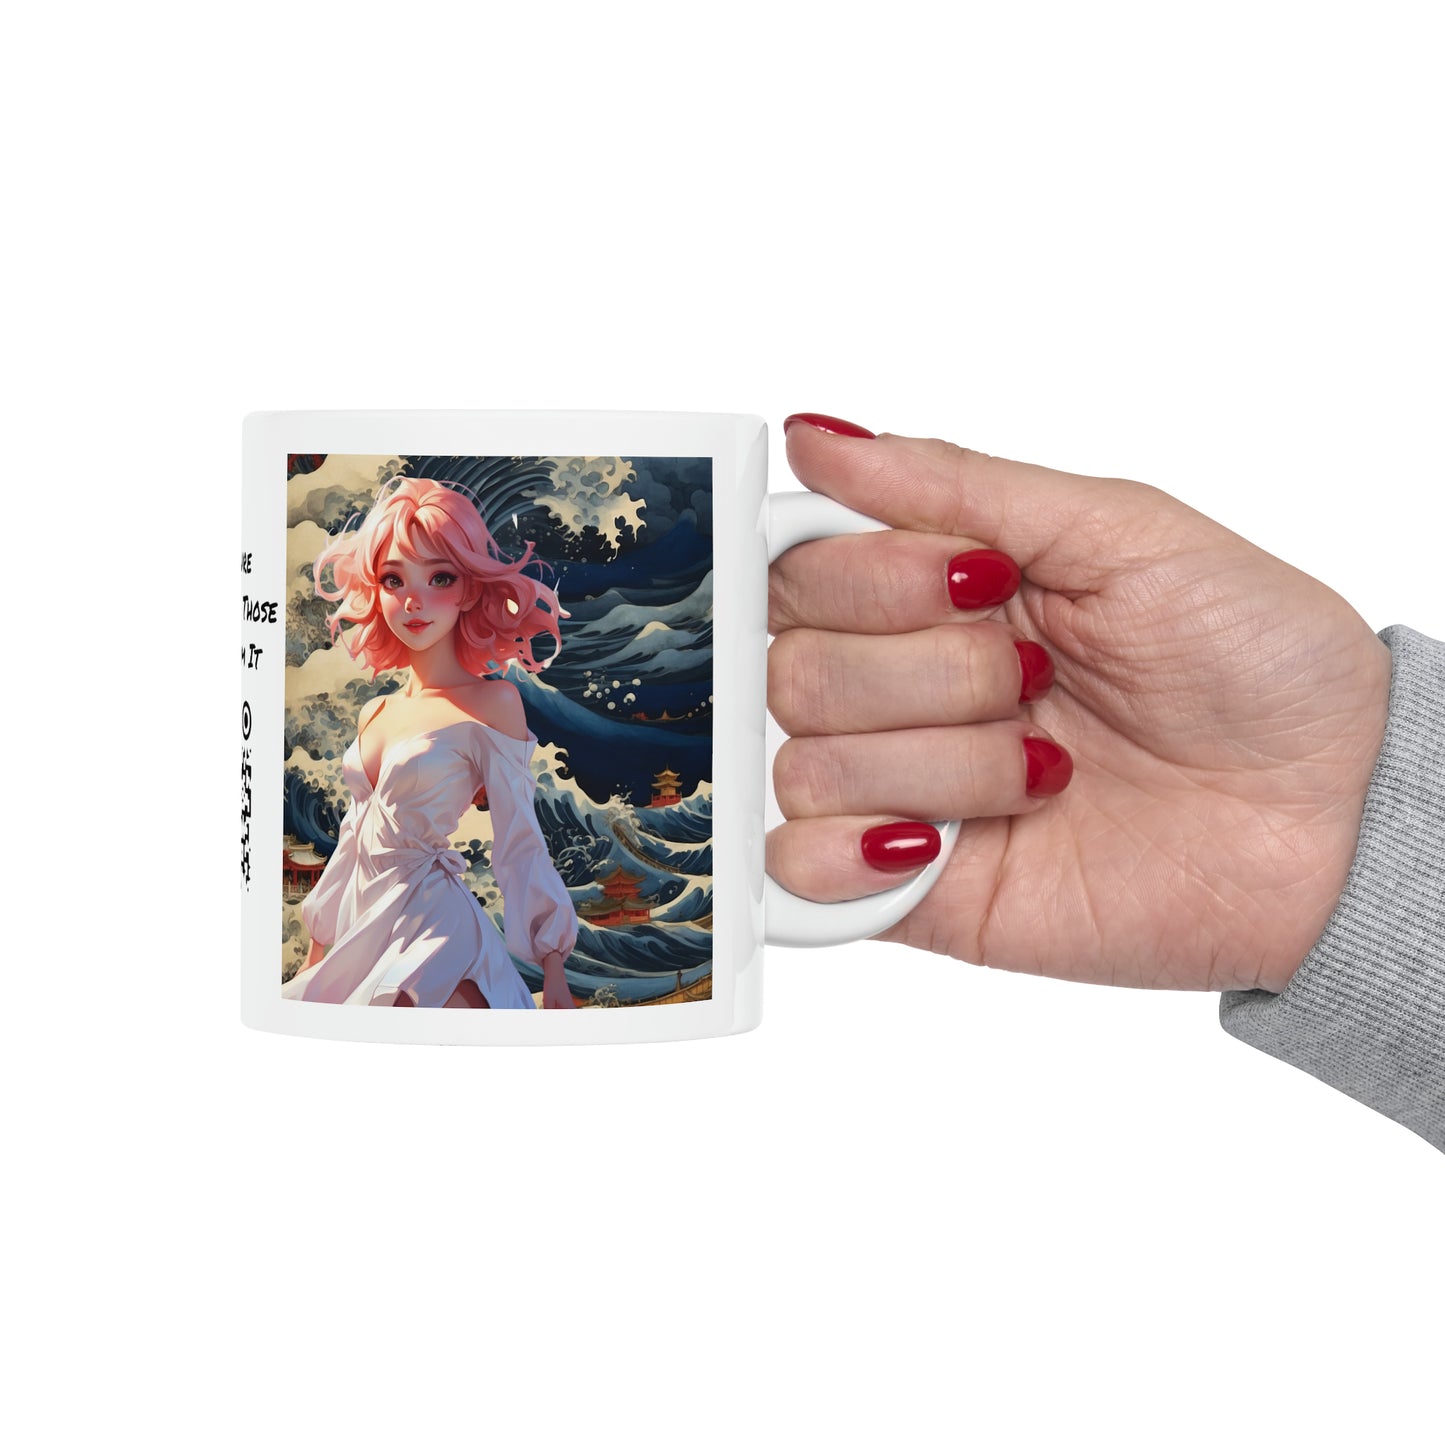 Waves of Beauty | HD Graphic | Pretty Girl | Japanese Art | Coffee | Tea | Hot Chocolate | 11oz | White Mug